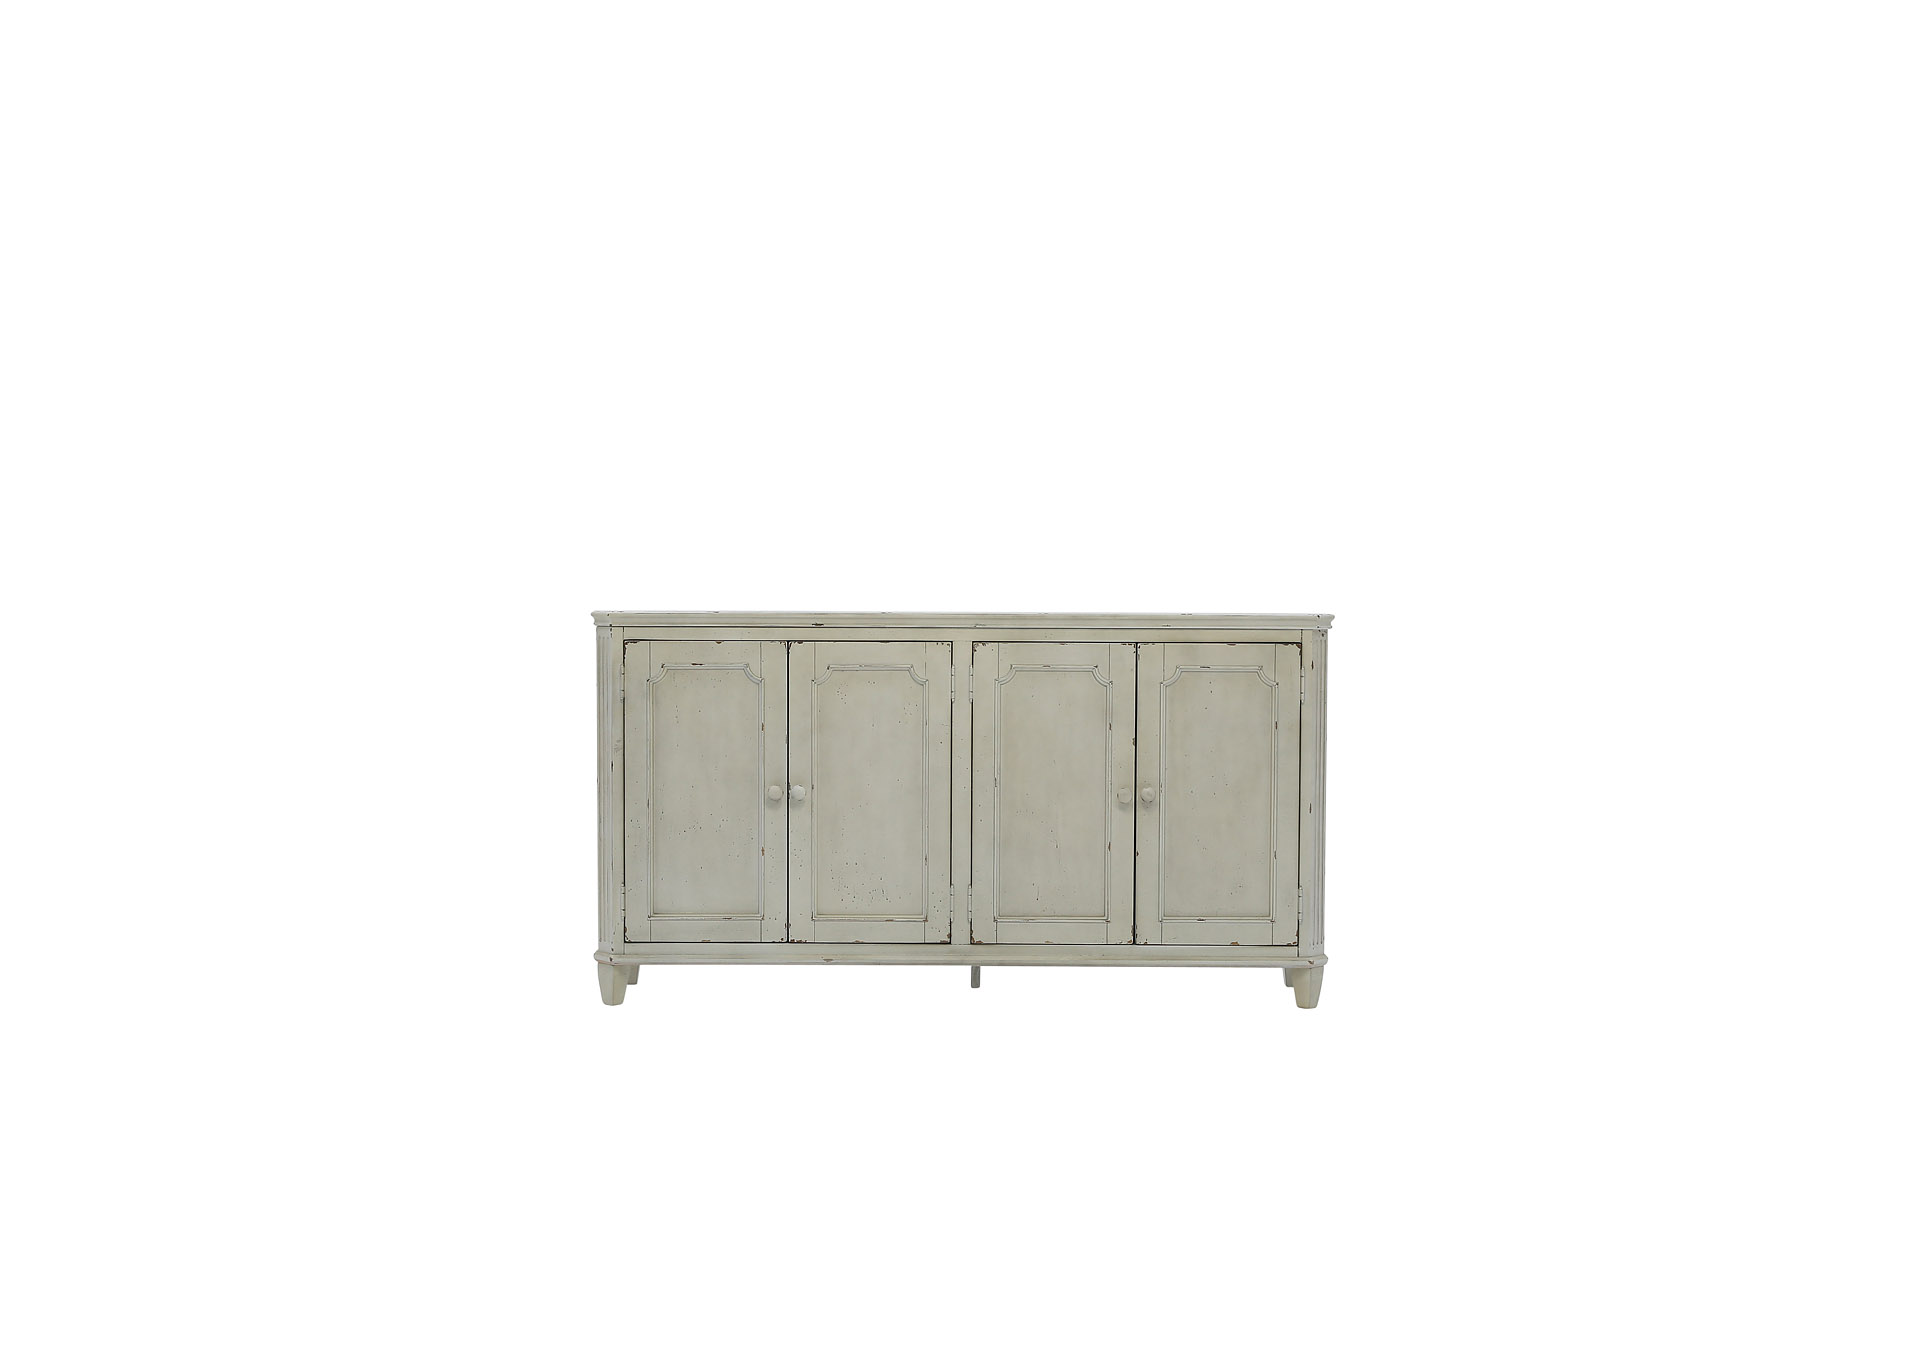 Mirimyn Antique White Door Accent Cabinet Ivan Smith Furniture